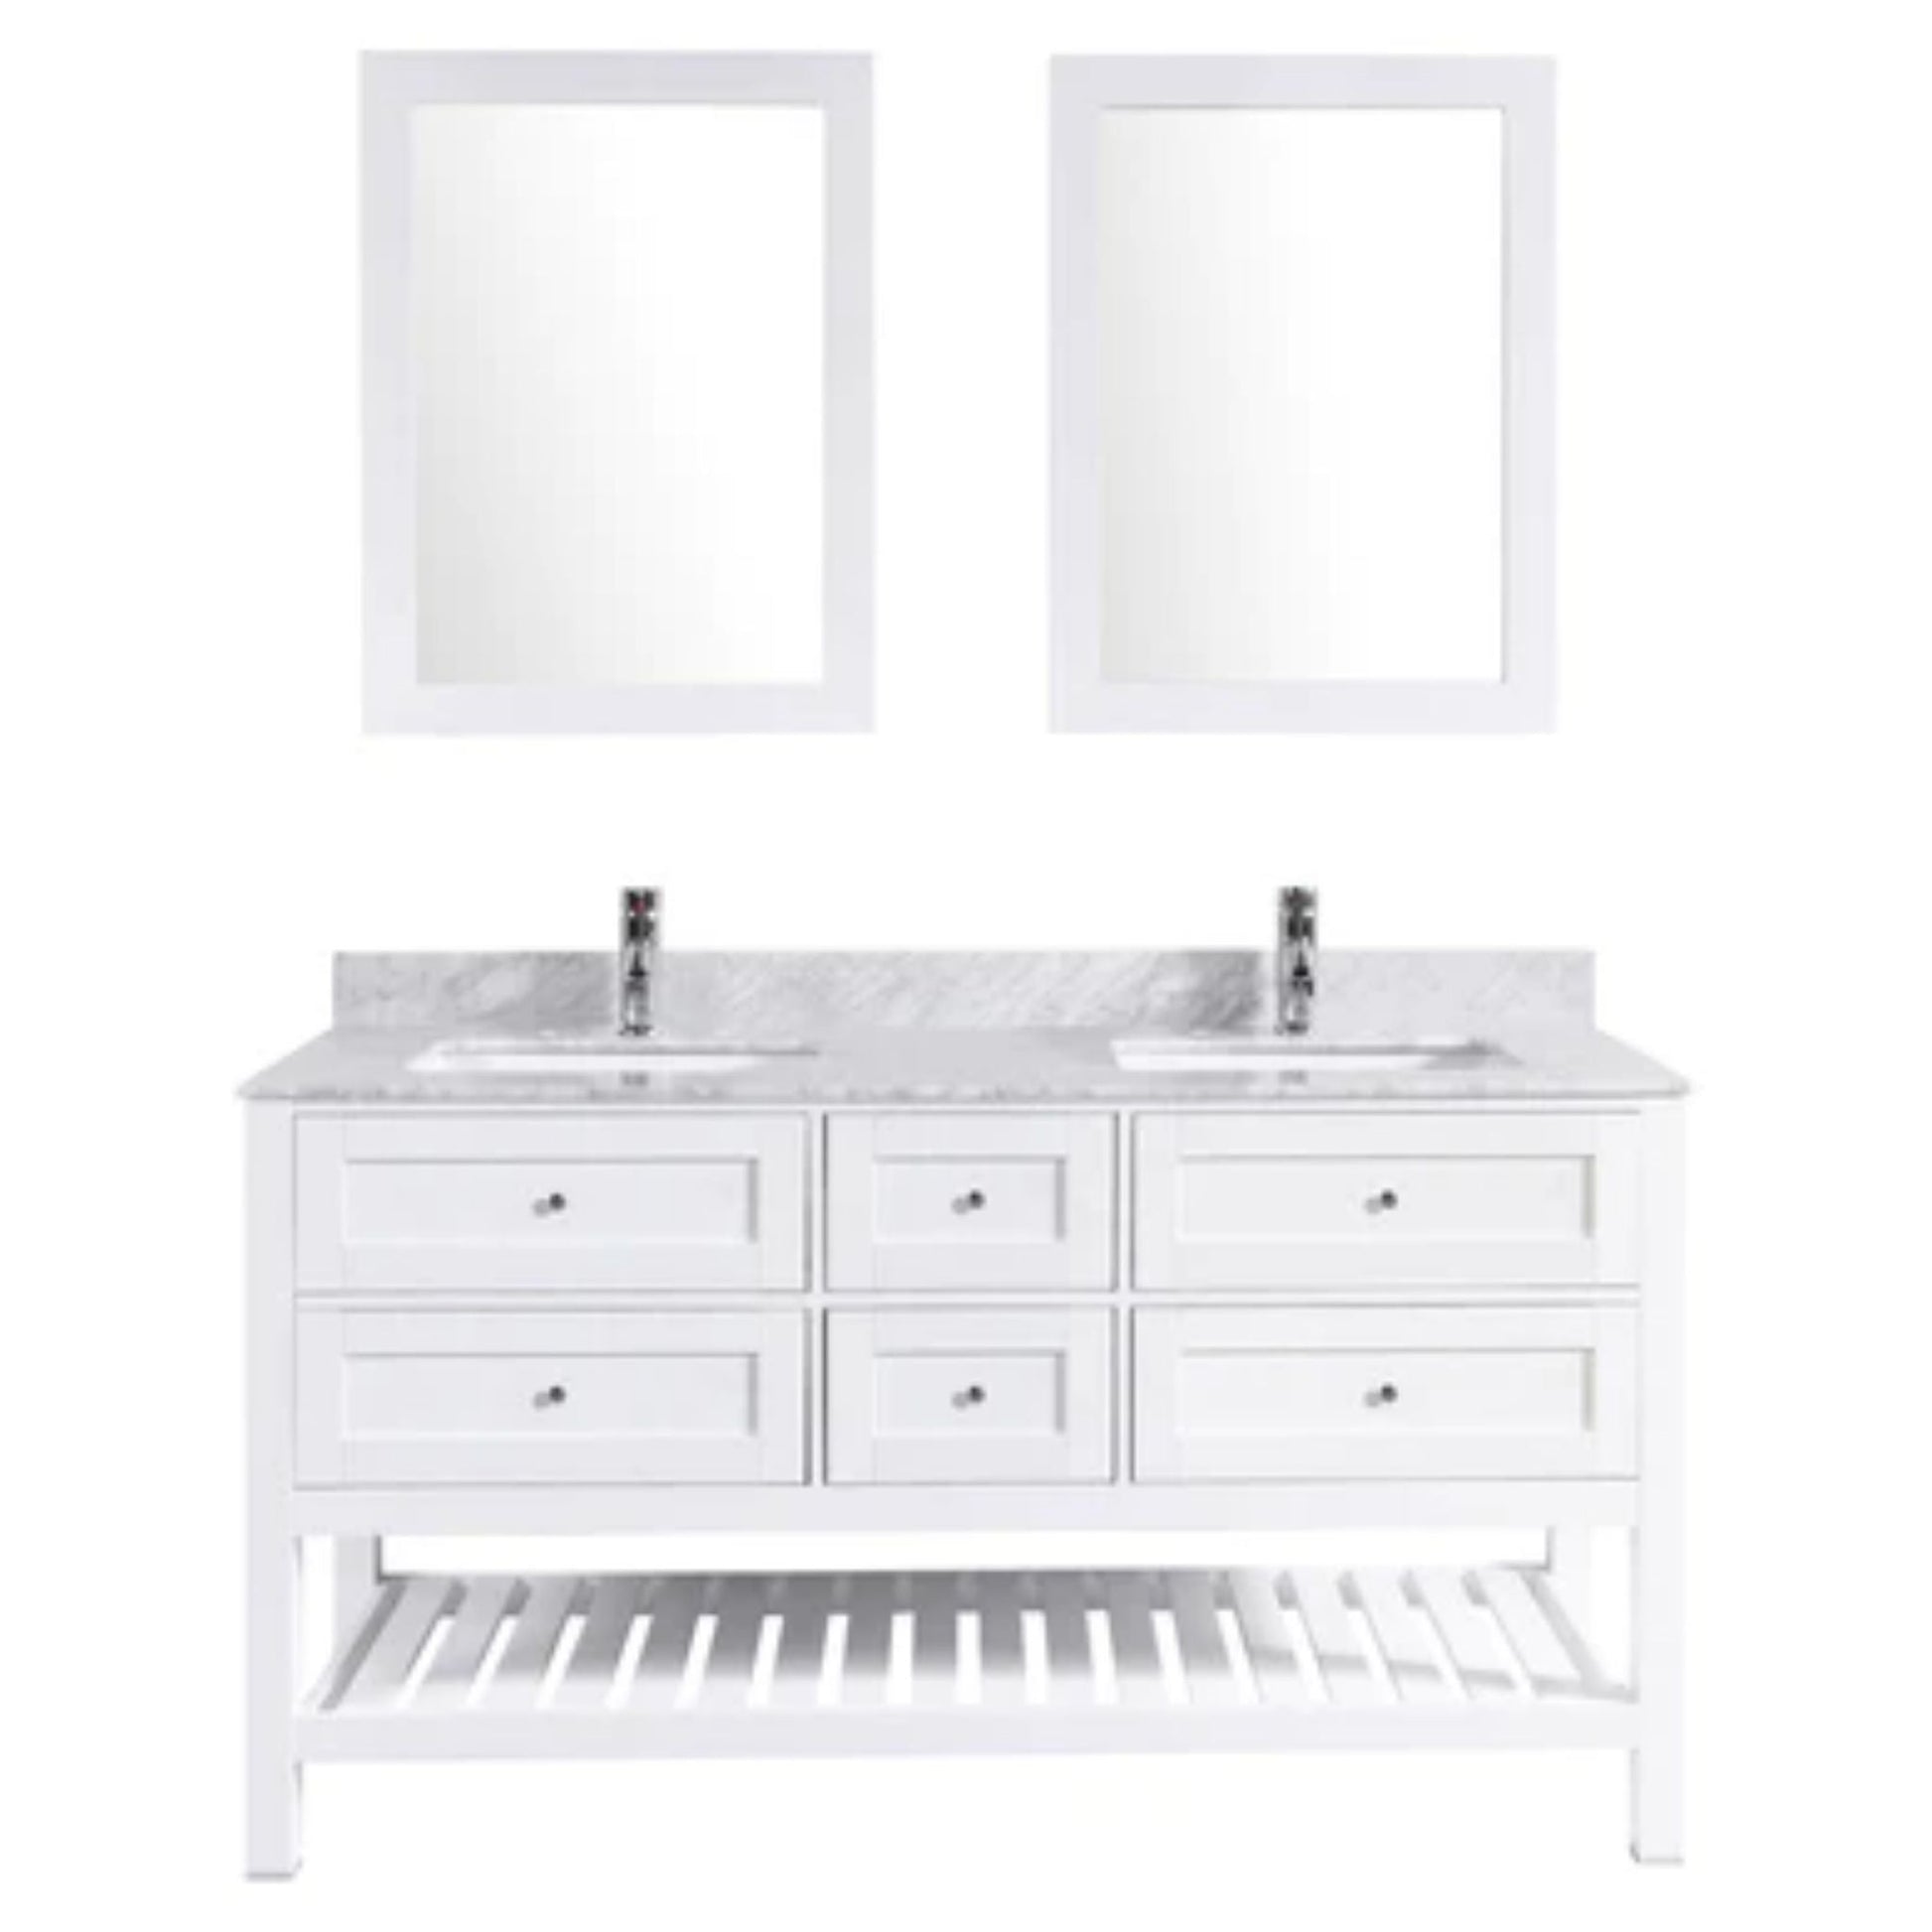 LessCare 59" White Vanity Cabinet Set